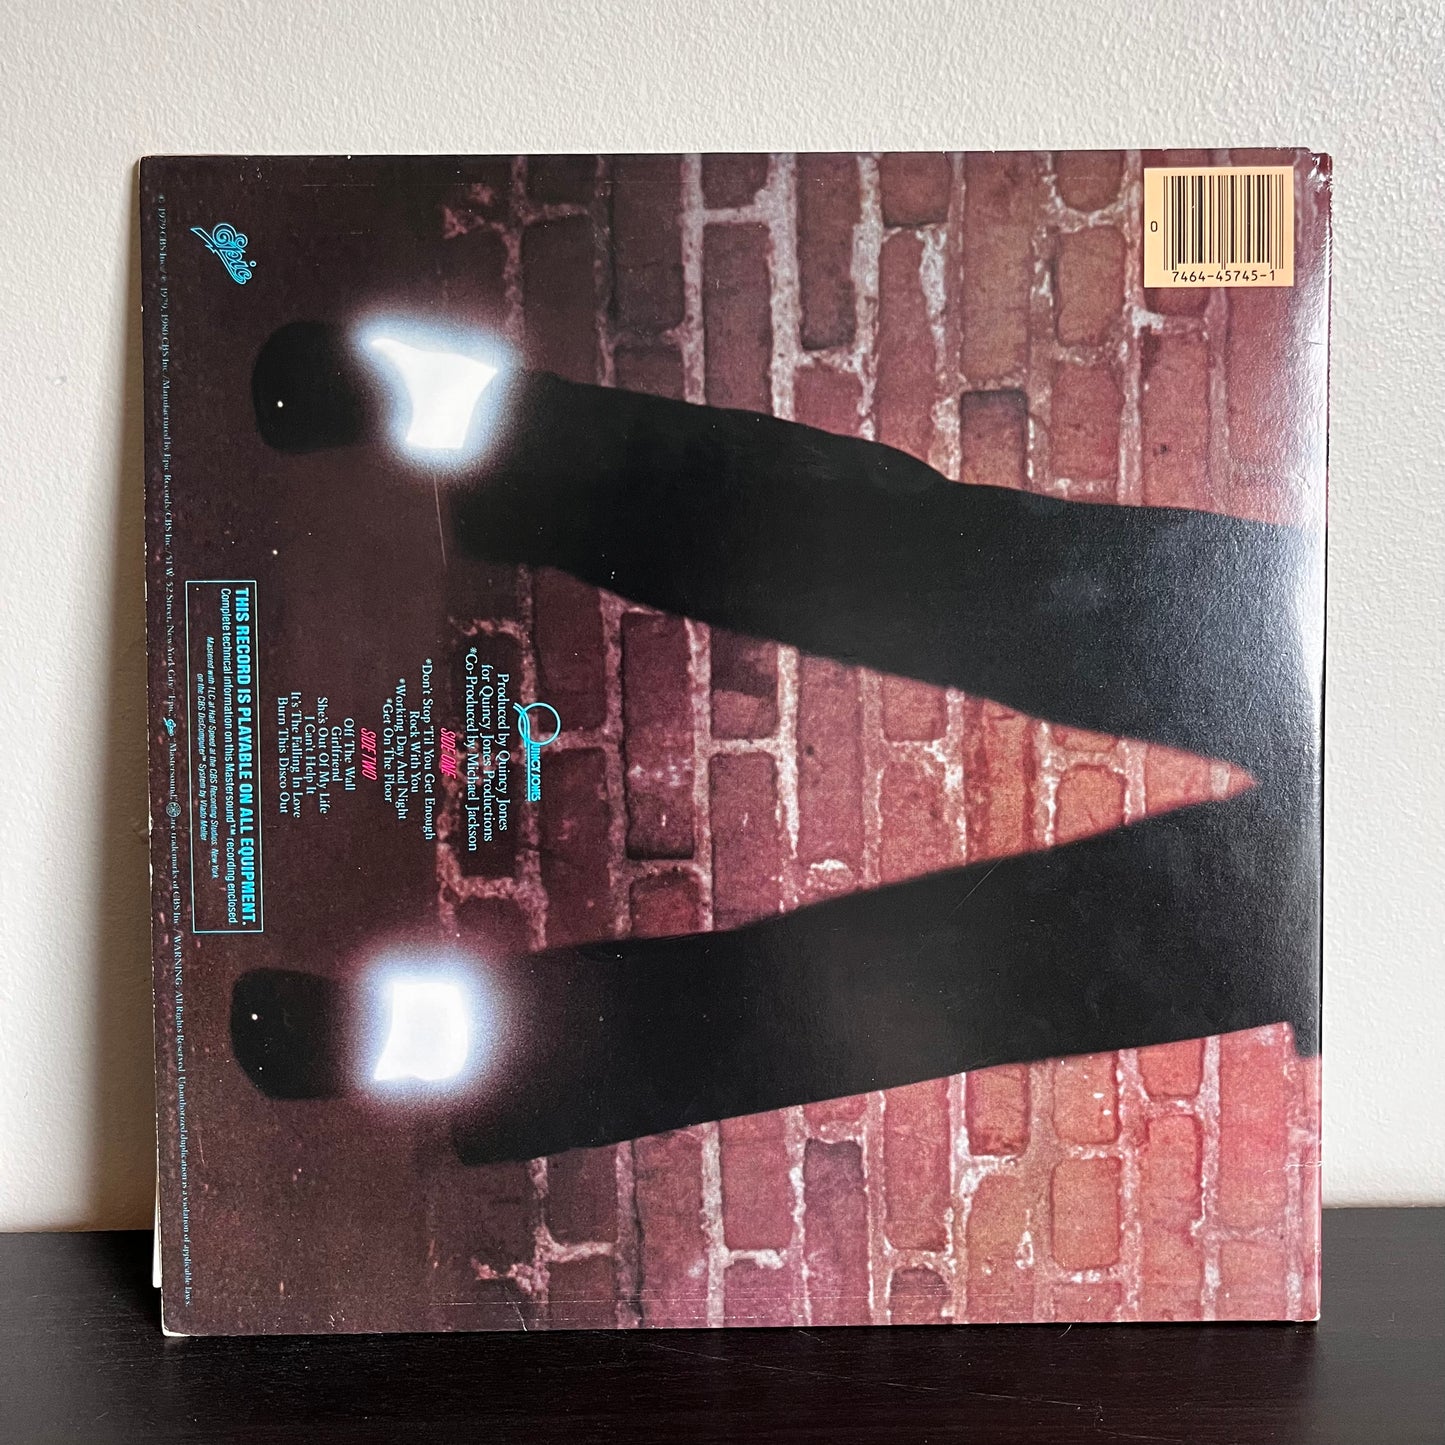 Off The Wall - Michael Jackson 1980 Half-Speed Mastered HAL 45745 Epic Used VG Vinyl